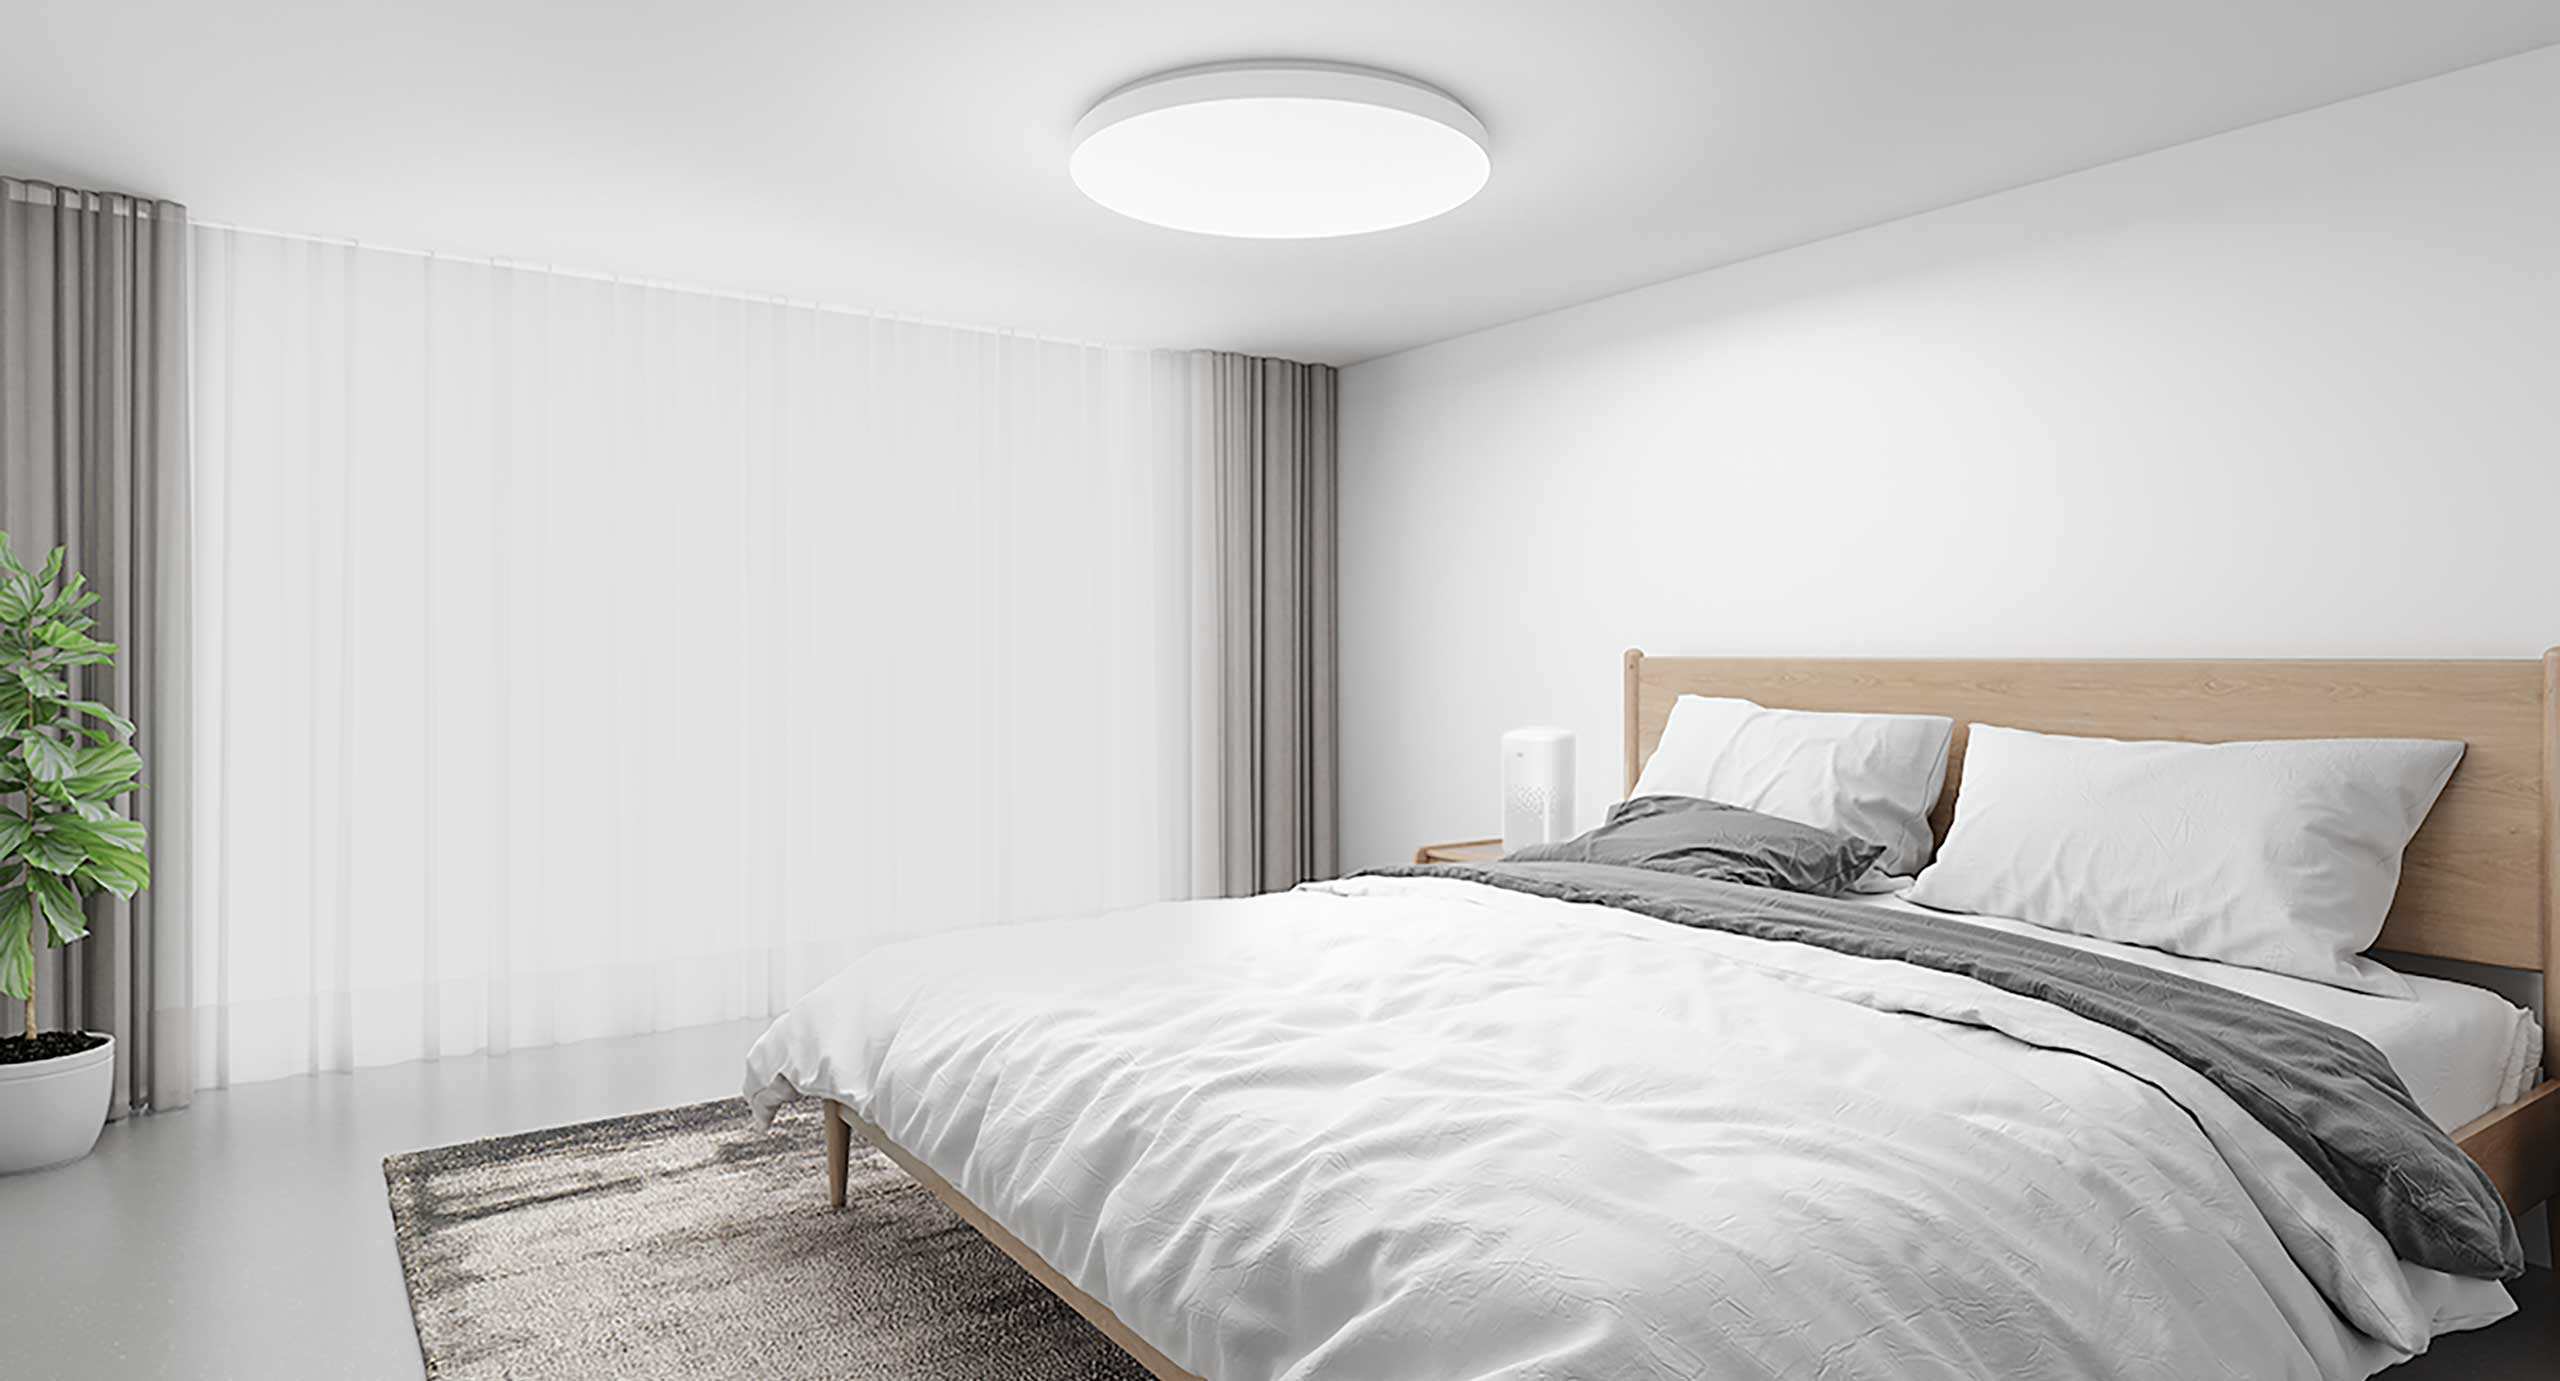 plafonnier-connectee-xiaomi-mi-smart-led-ceiling-light-eclairage-mitunisie